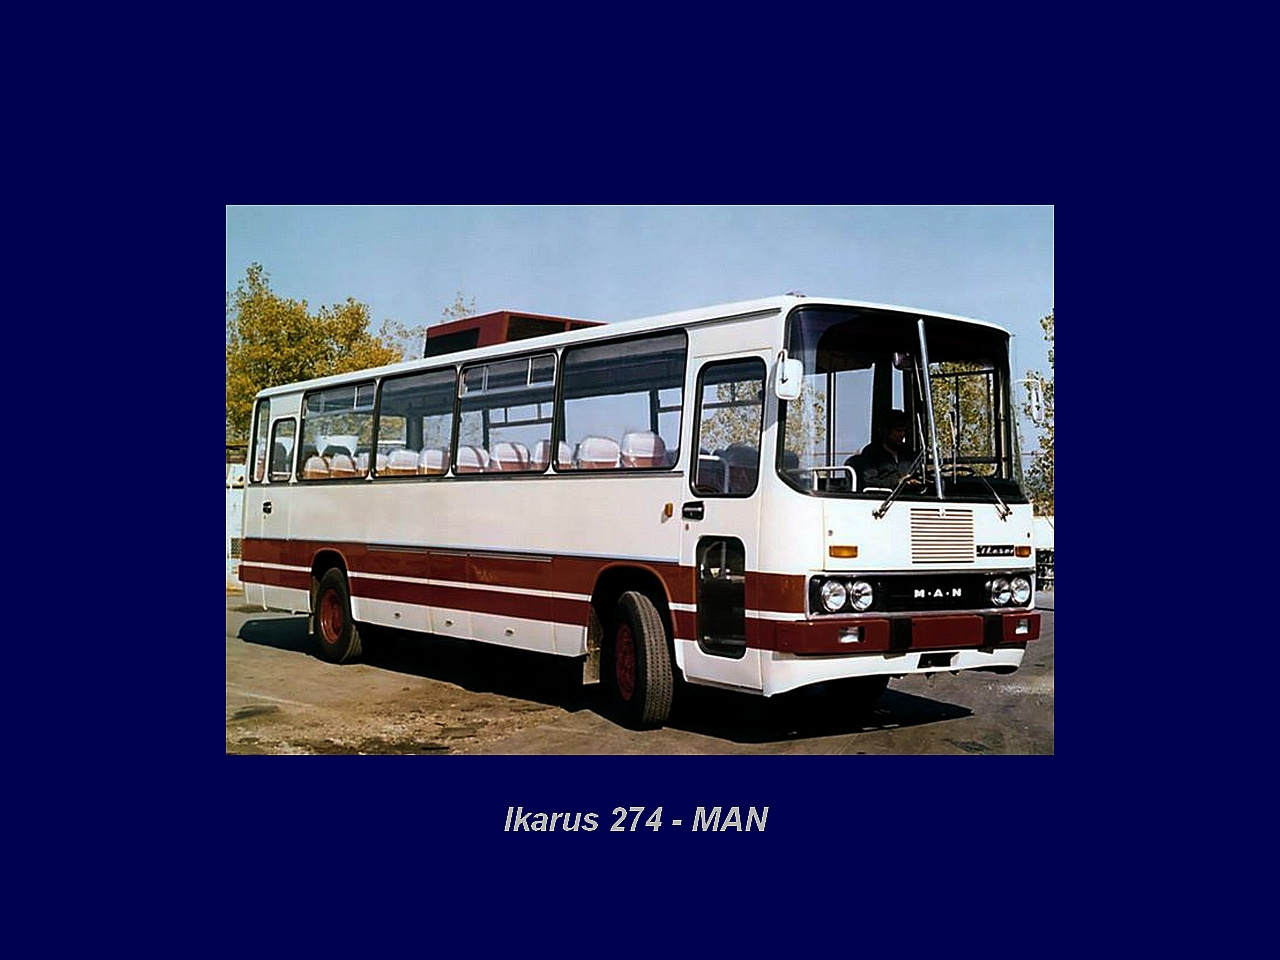 Magyar Busz, Ikarus 274 - MAN